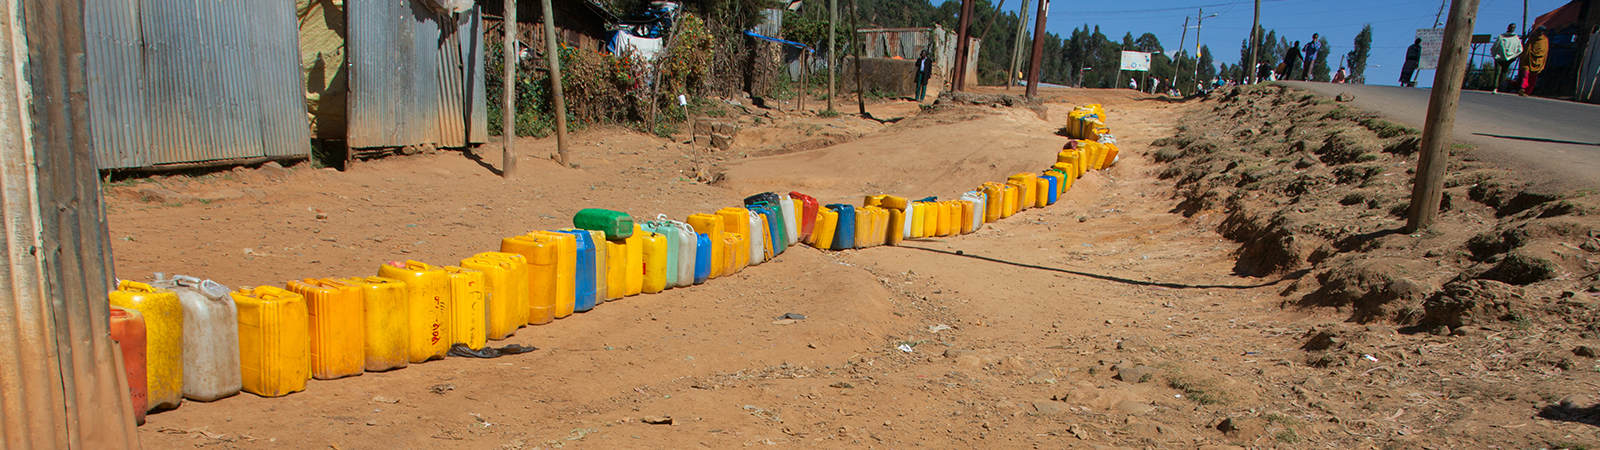 Waiting for water in Ethiopia © Aleksandr Hunta / Shutterstock